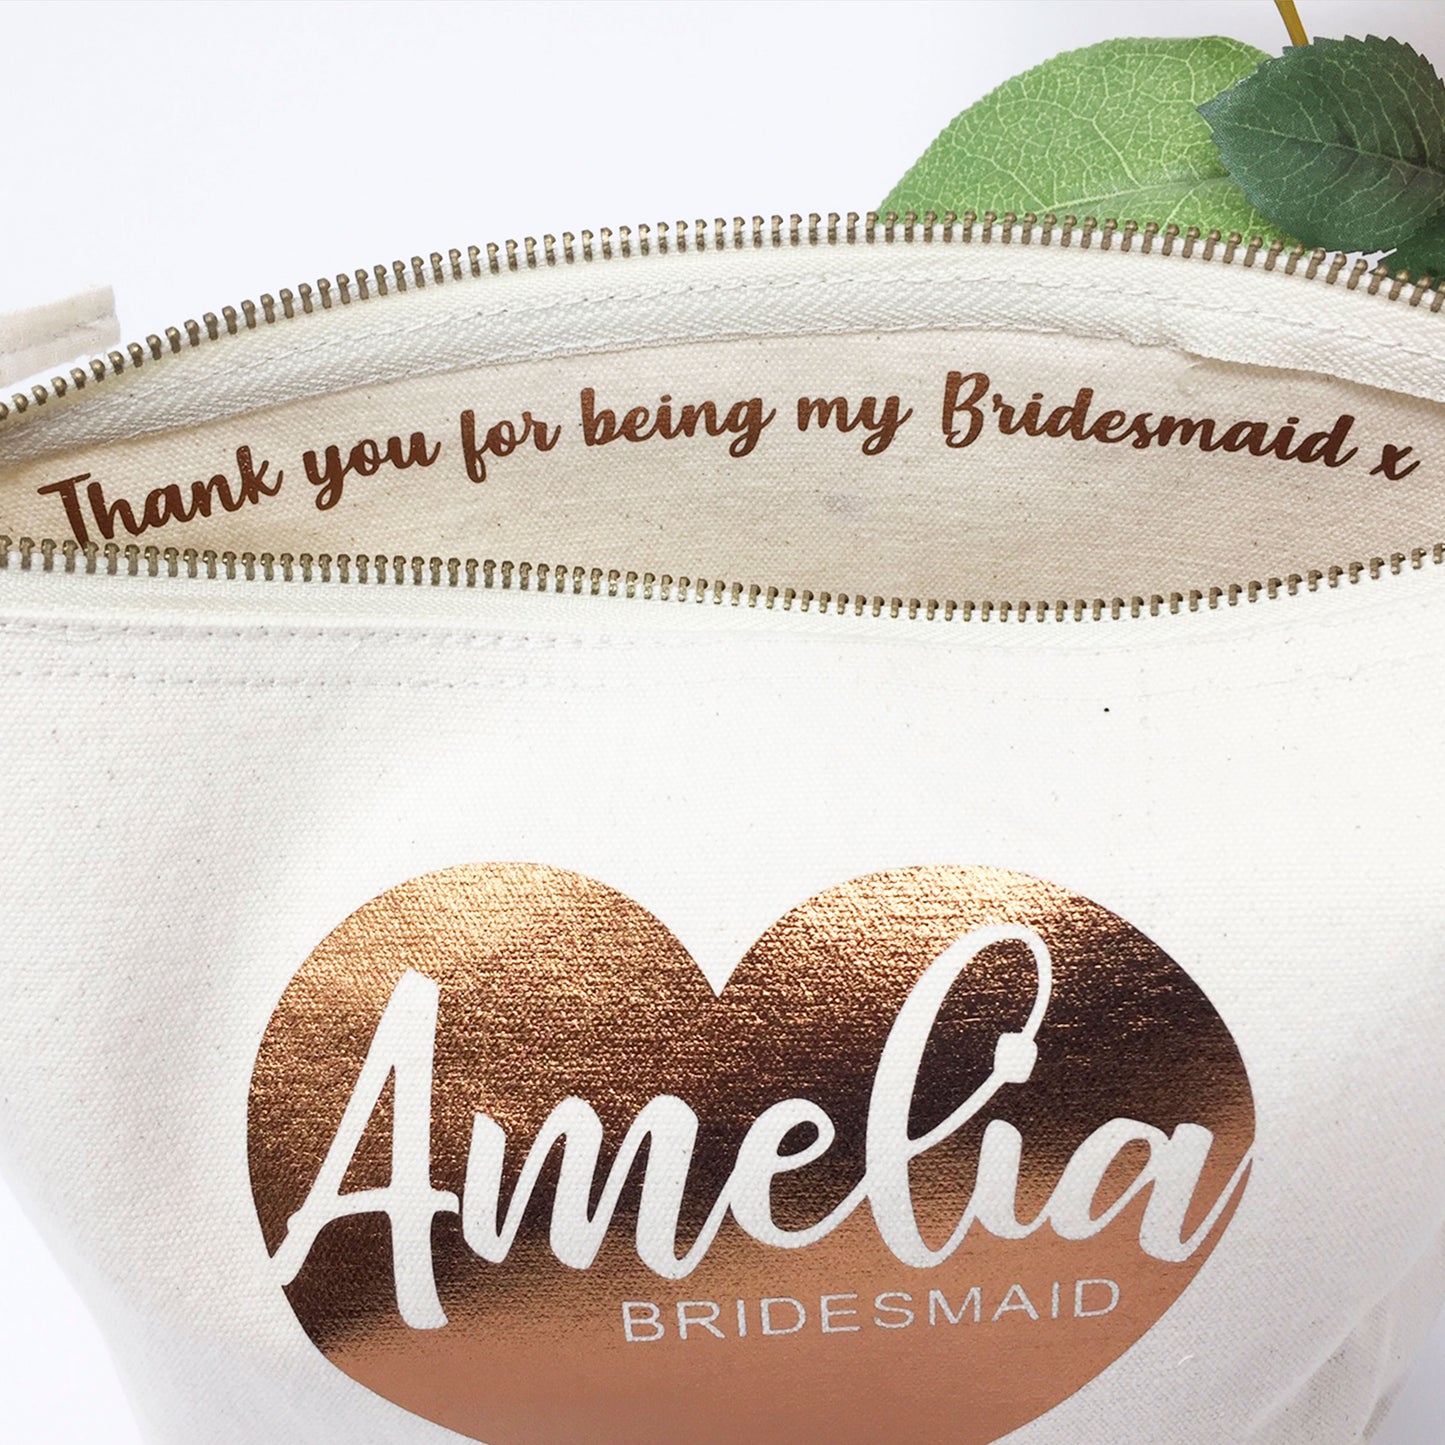 Personalised Bridesmaid Cosmetic Bag - FREE UK SHIPPING